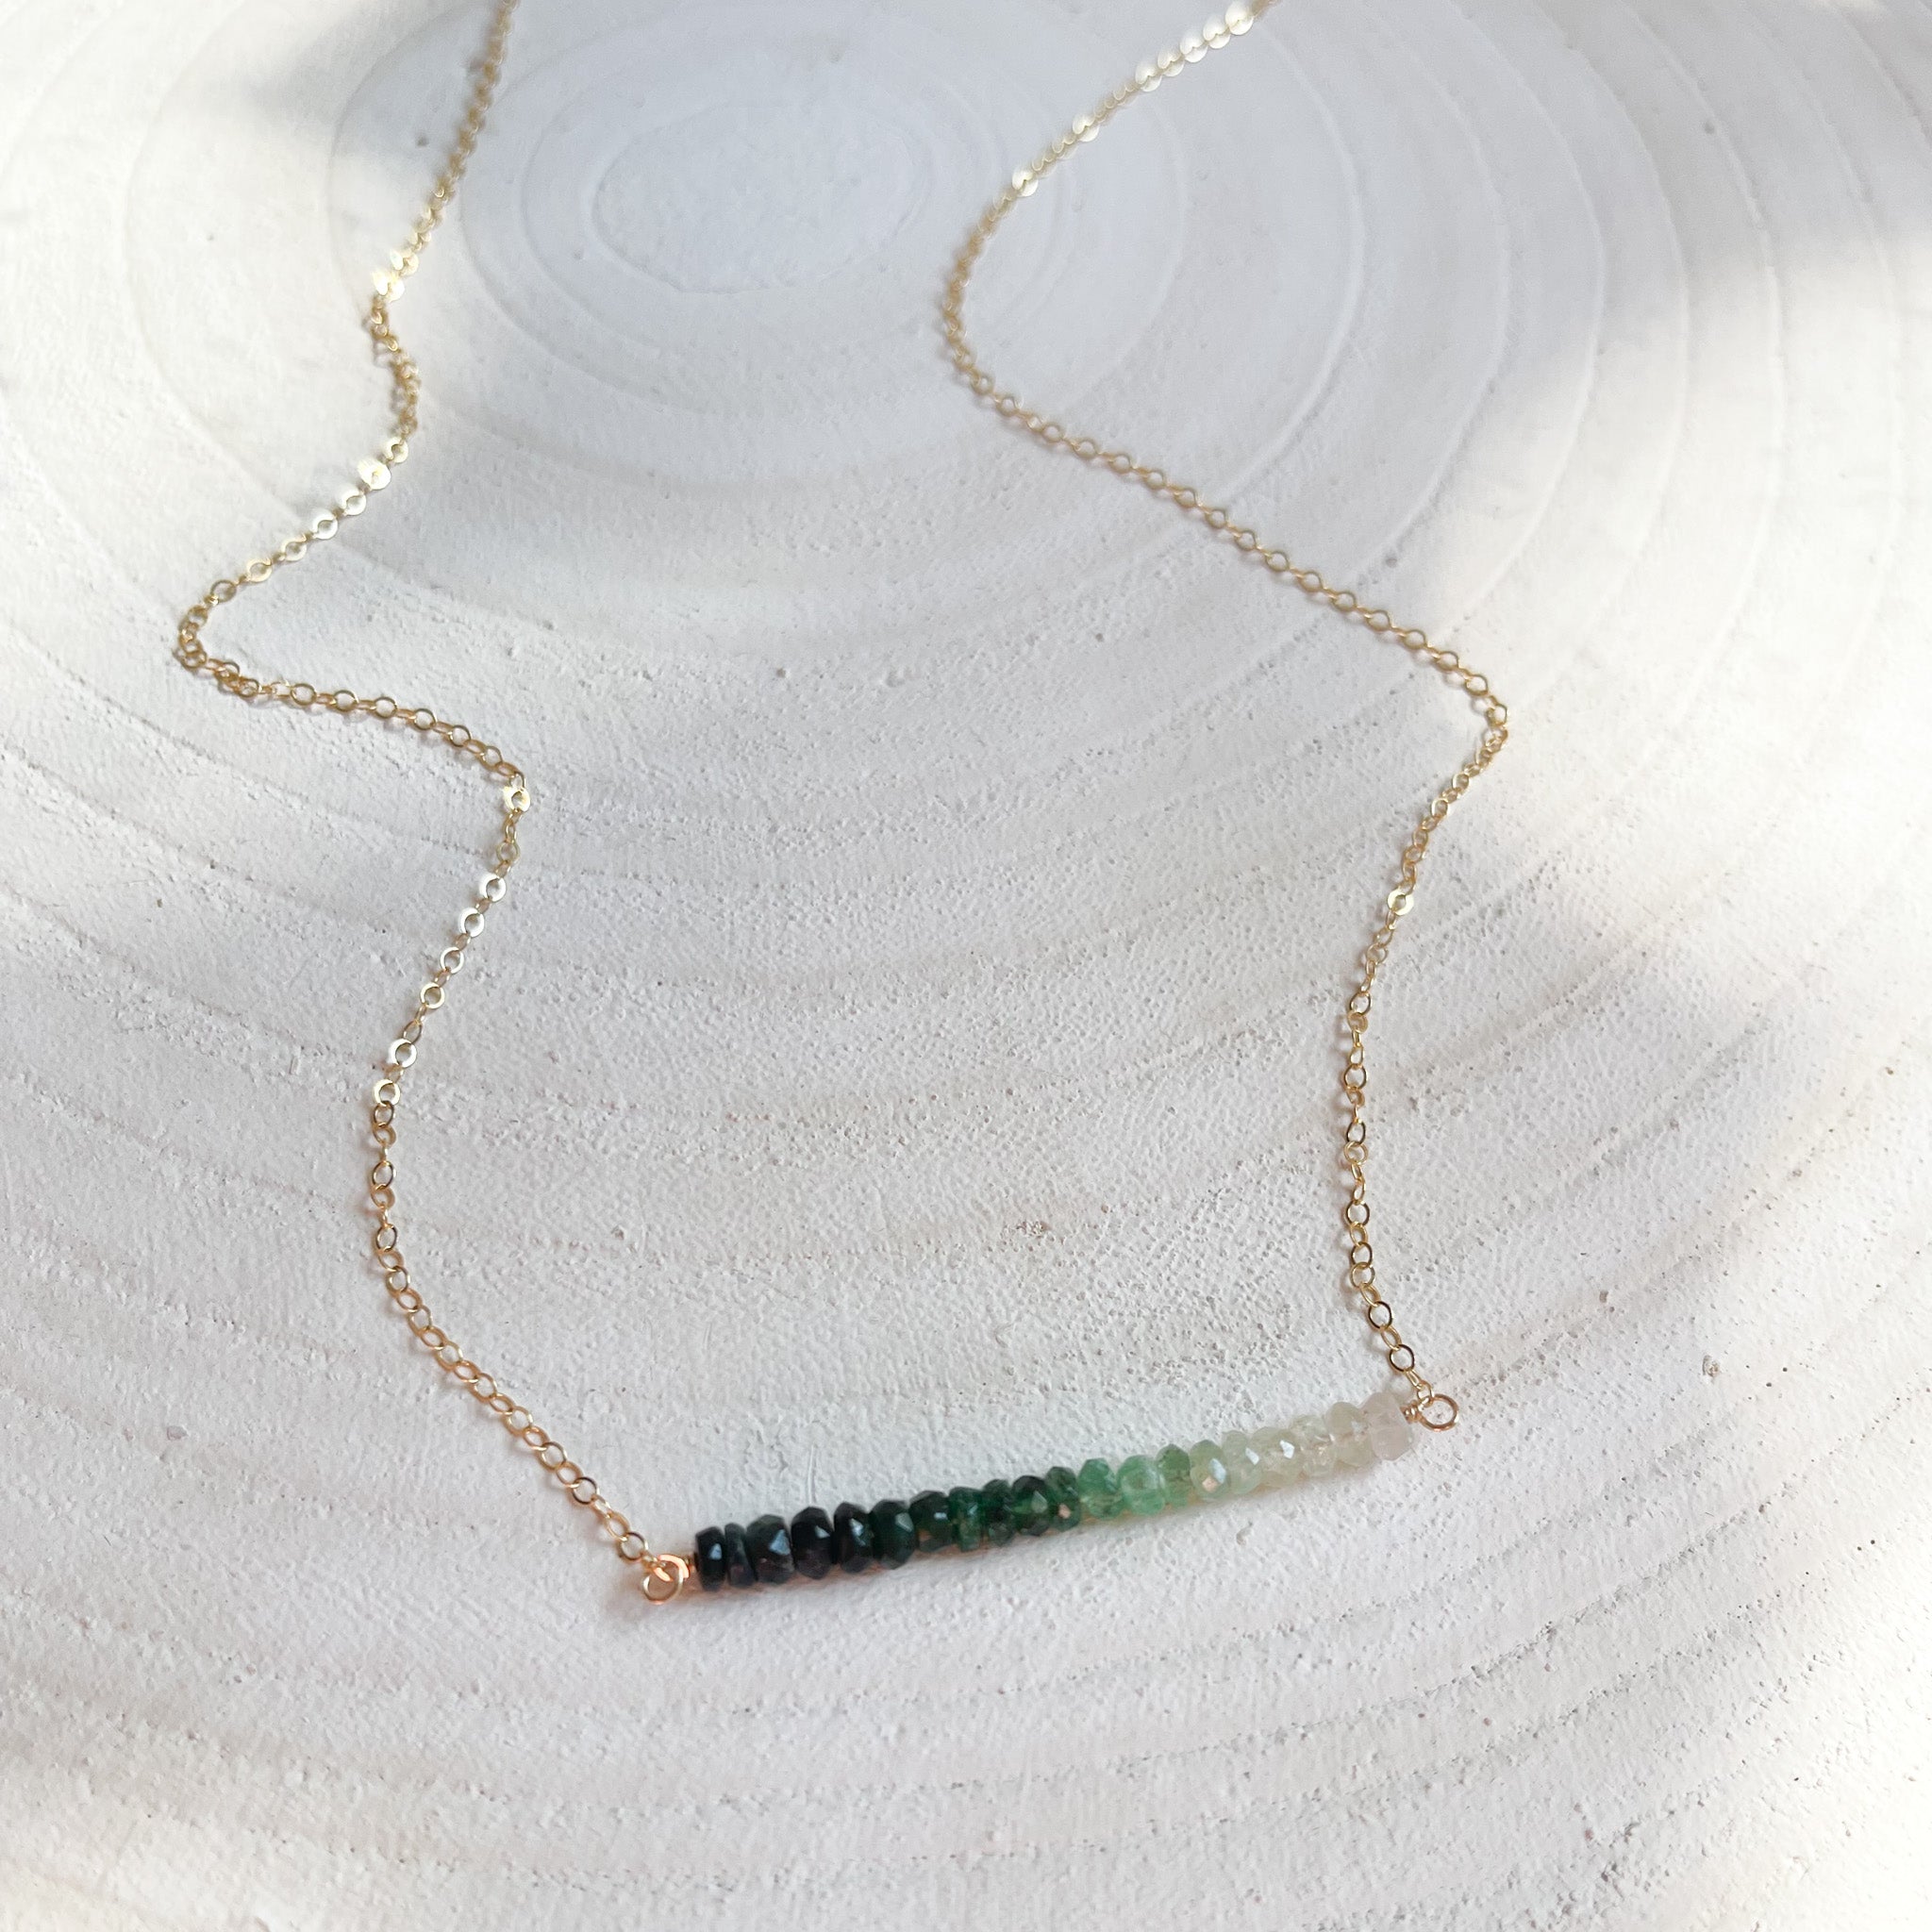 Emerald Gemstone Necklace, Green Crystal Necklace, Modern Minimalist Jewelry